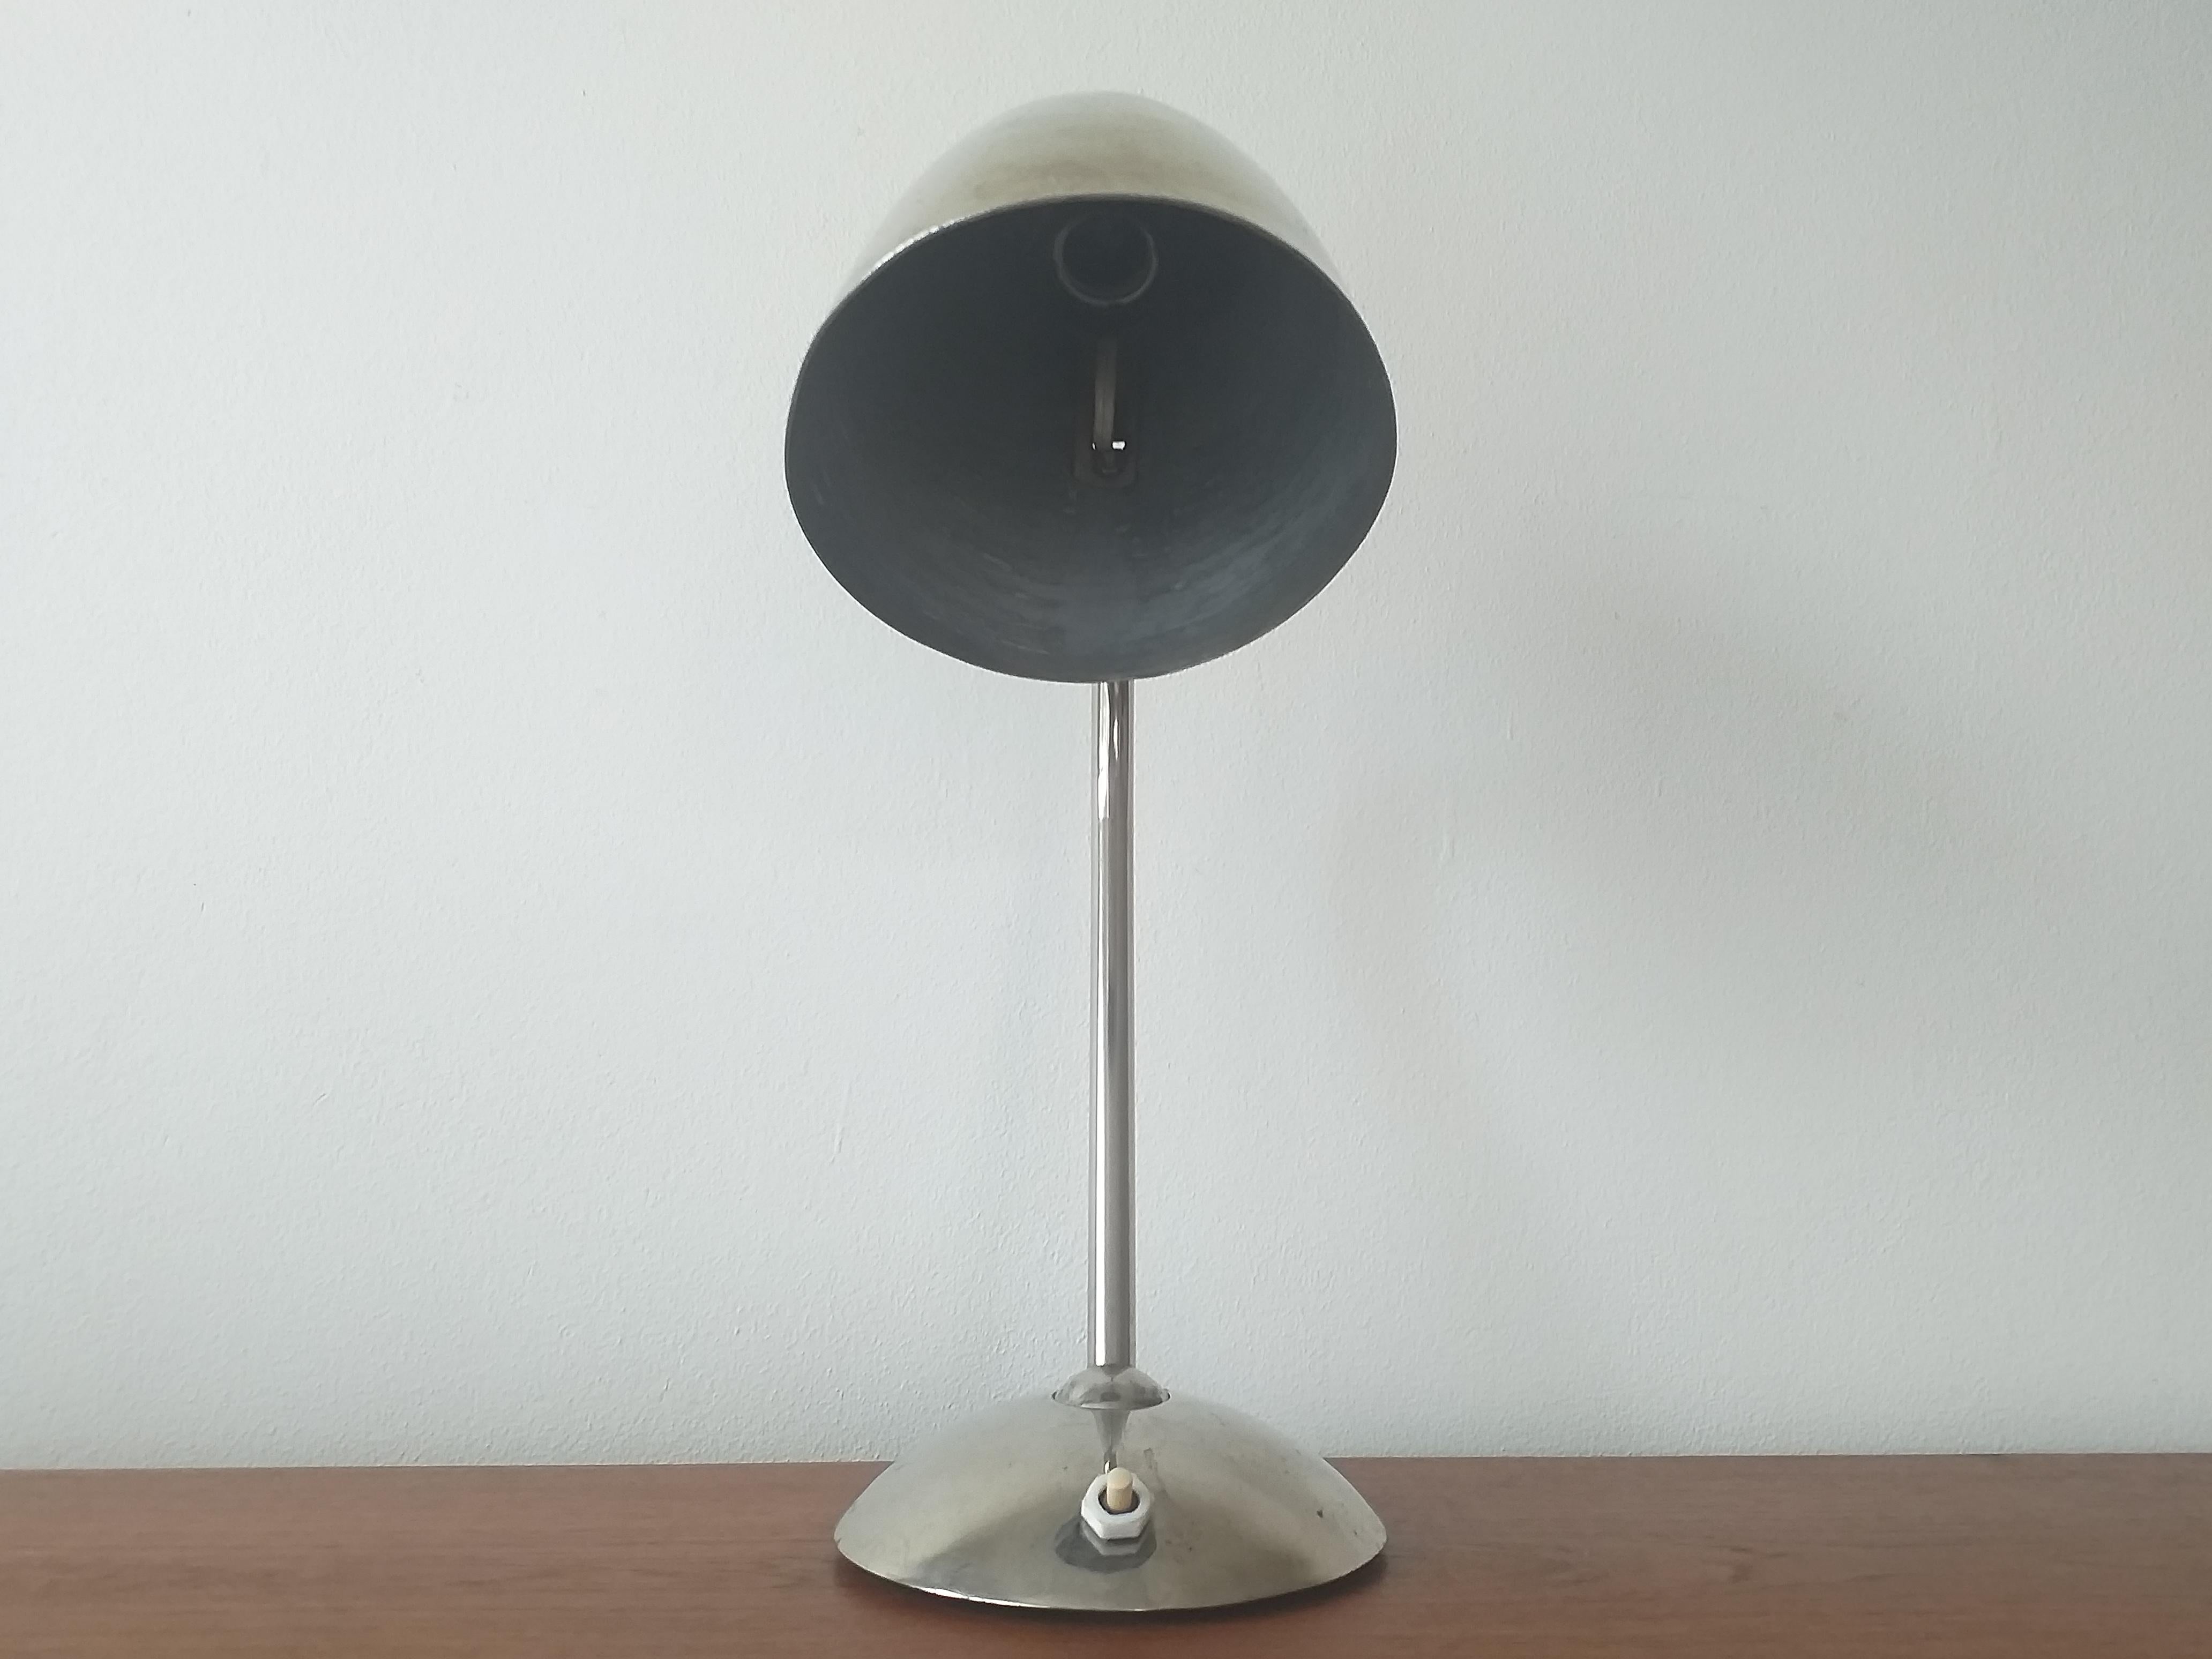 Czech Art Deco, Functionalism, Bauhaus Table Lamp, Franta Anyz, 1930s